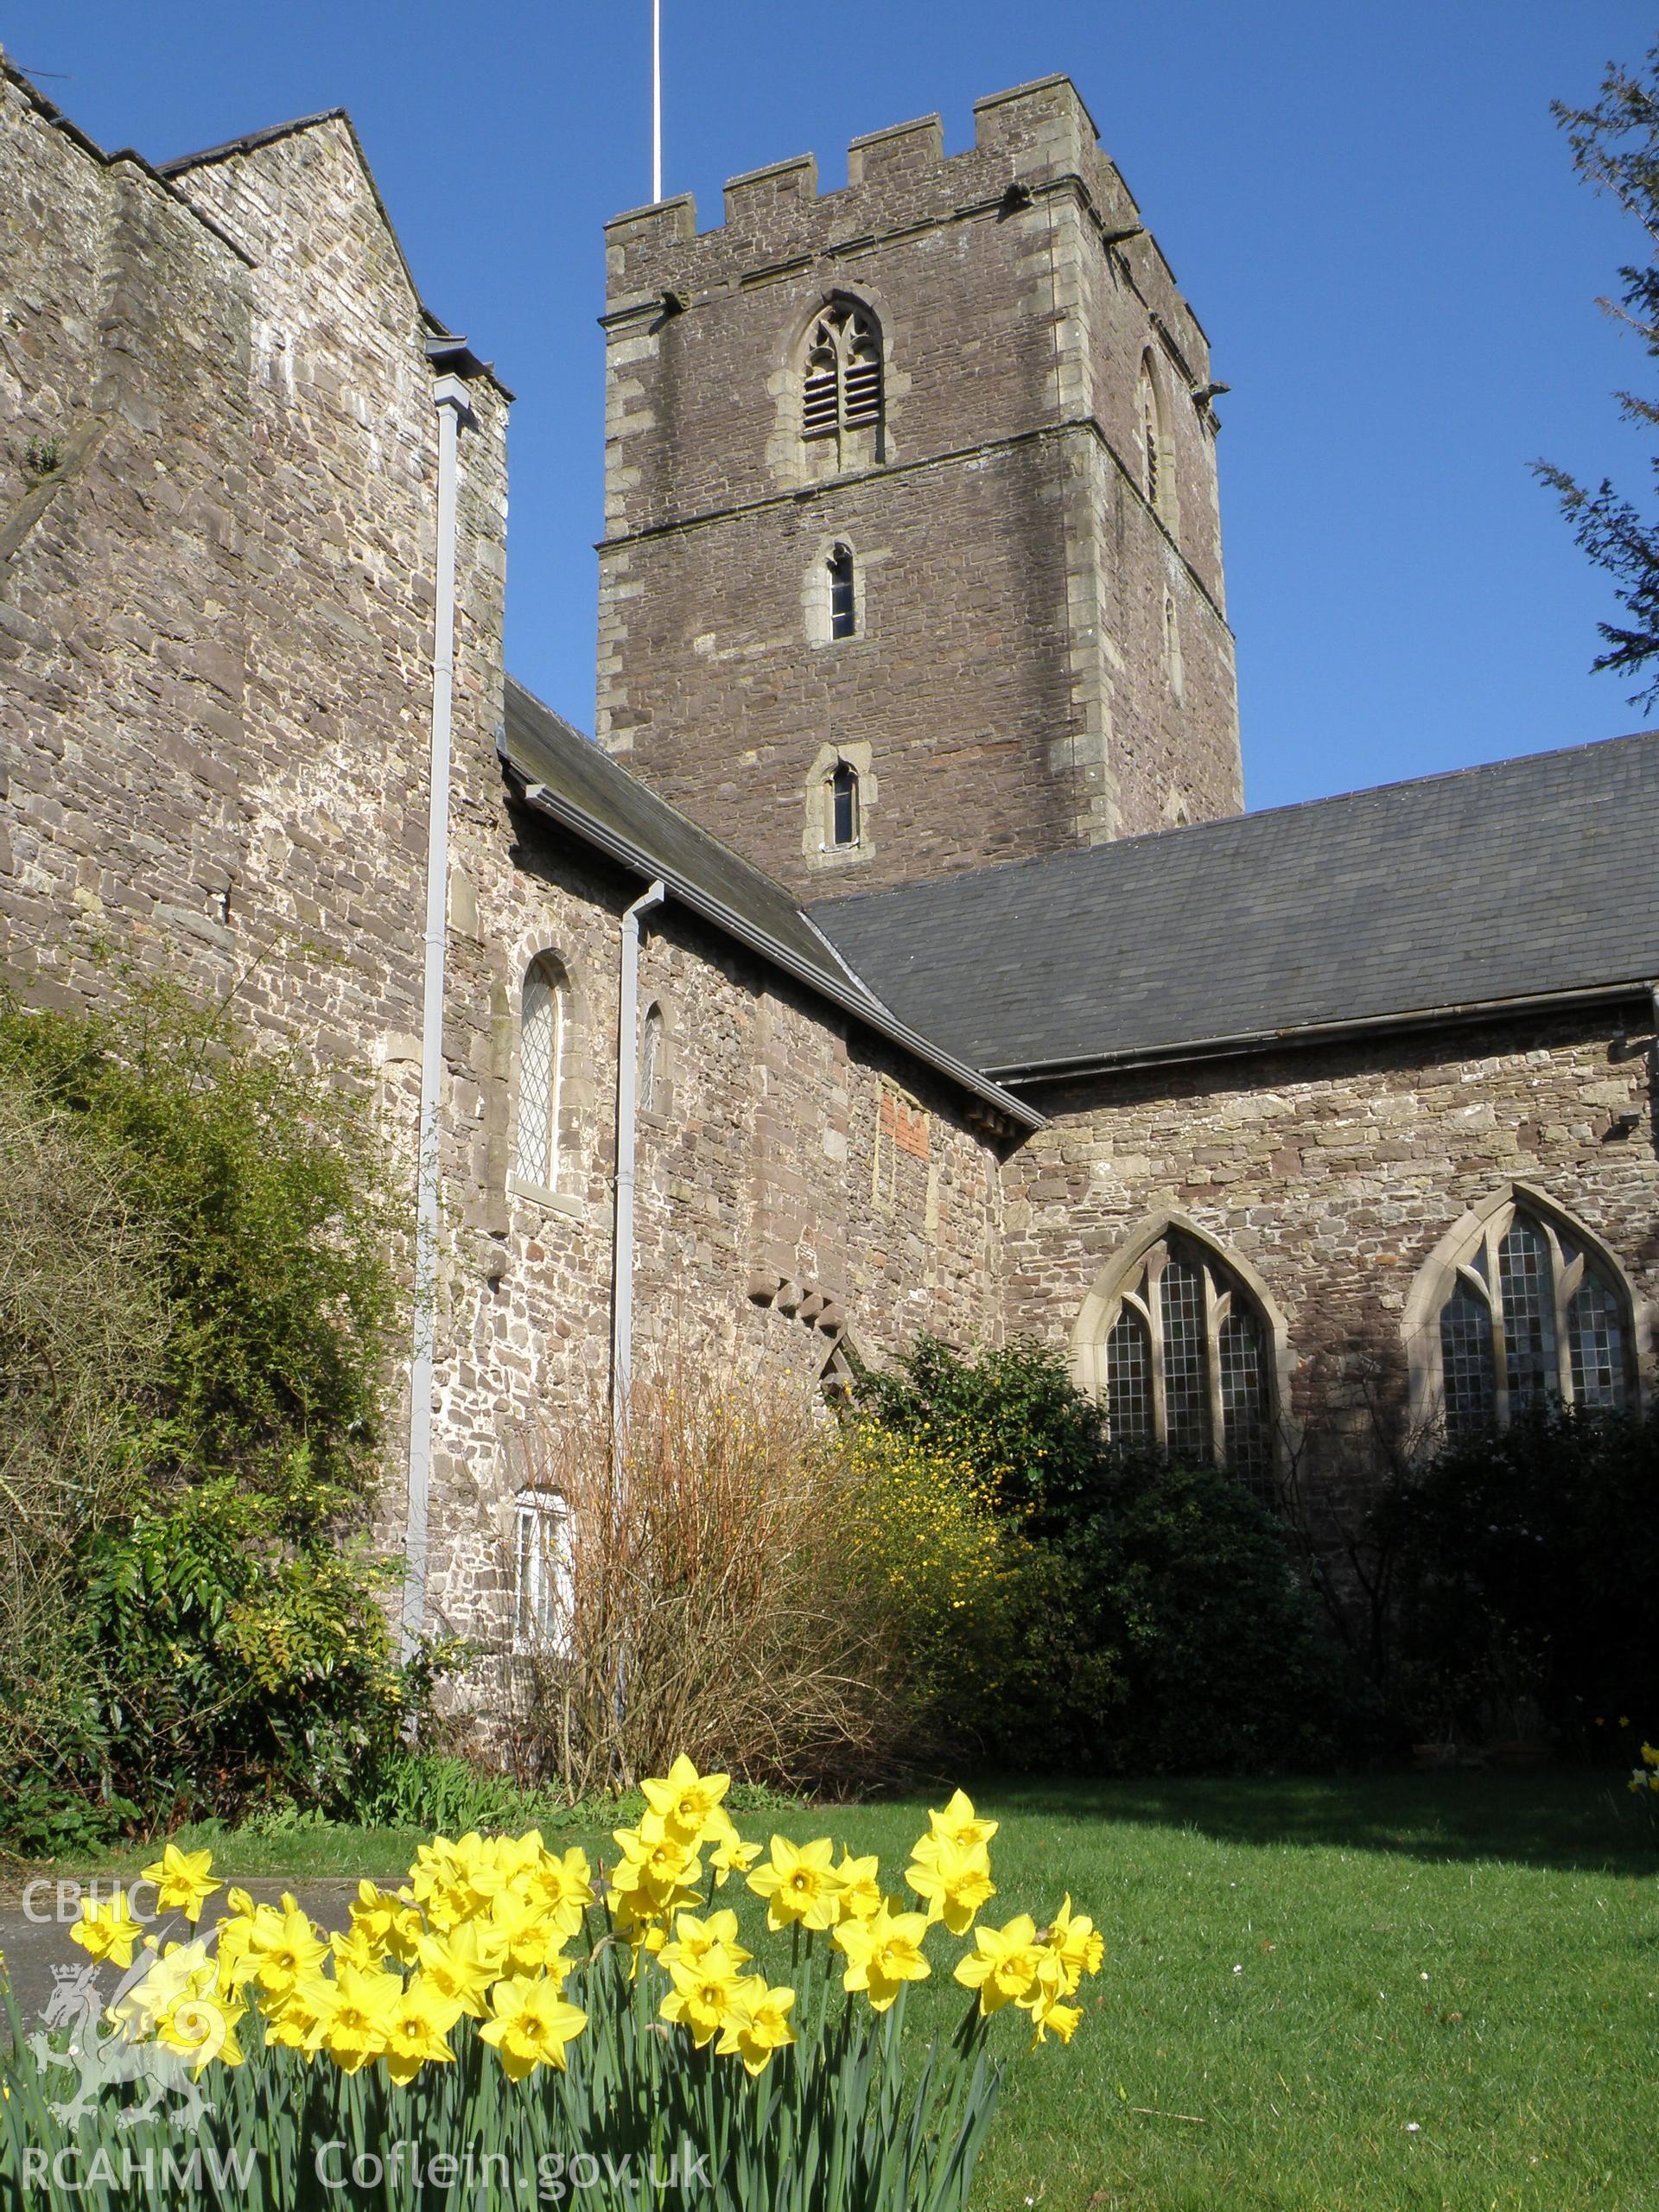 Colour photo of Abergavenny Church, taken by Paul R. Davis, c.2011.